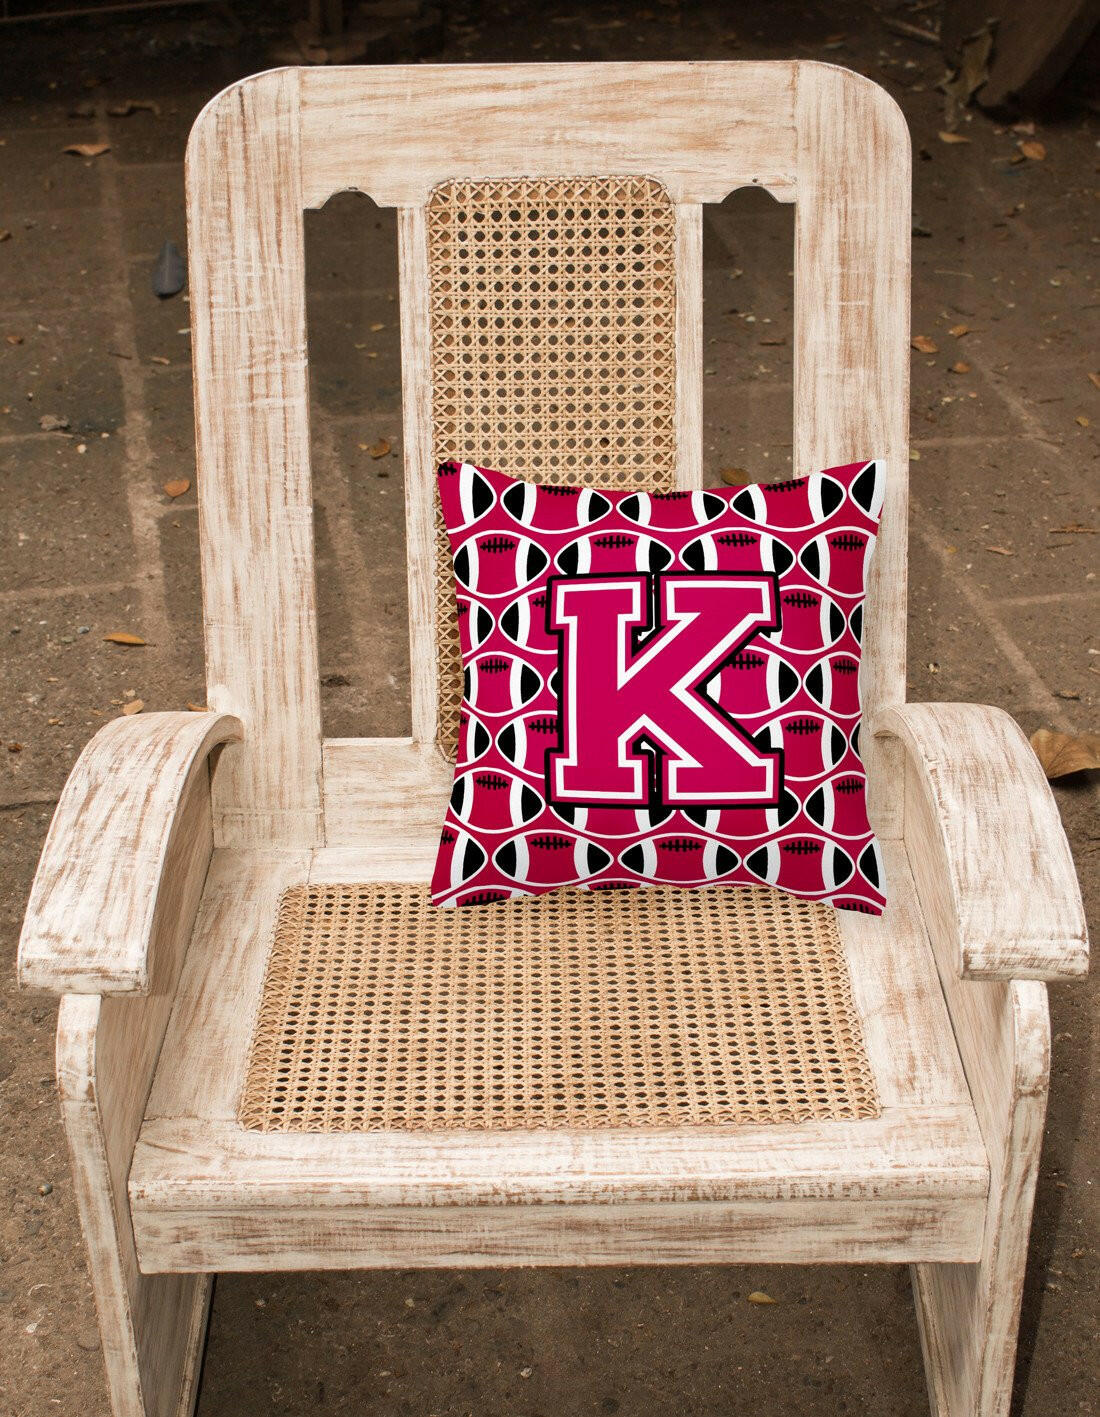 Letter K Football Crimson and White Fabric Decorative Pillow CJ1079-KPW1414 by Caroline's Treasures